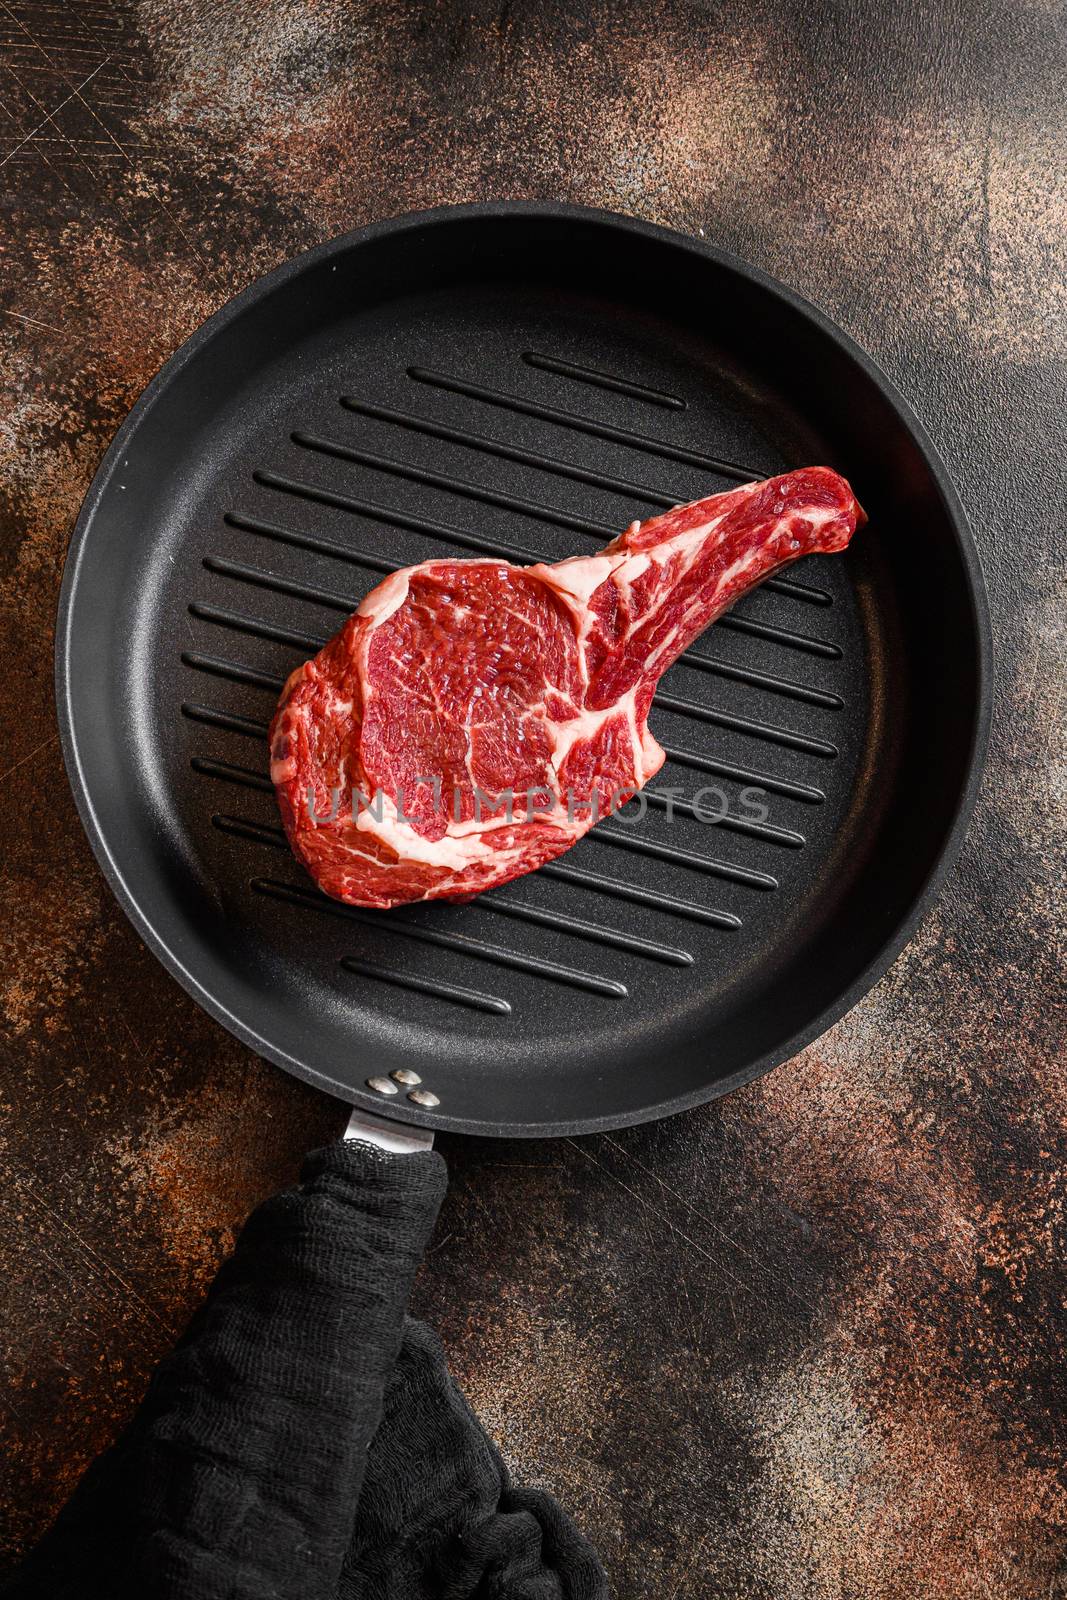 Bone In Steak on the grill pan skillet or Dallas steak raw top view. ove rustic metal dark background table.